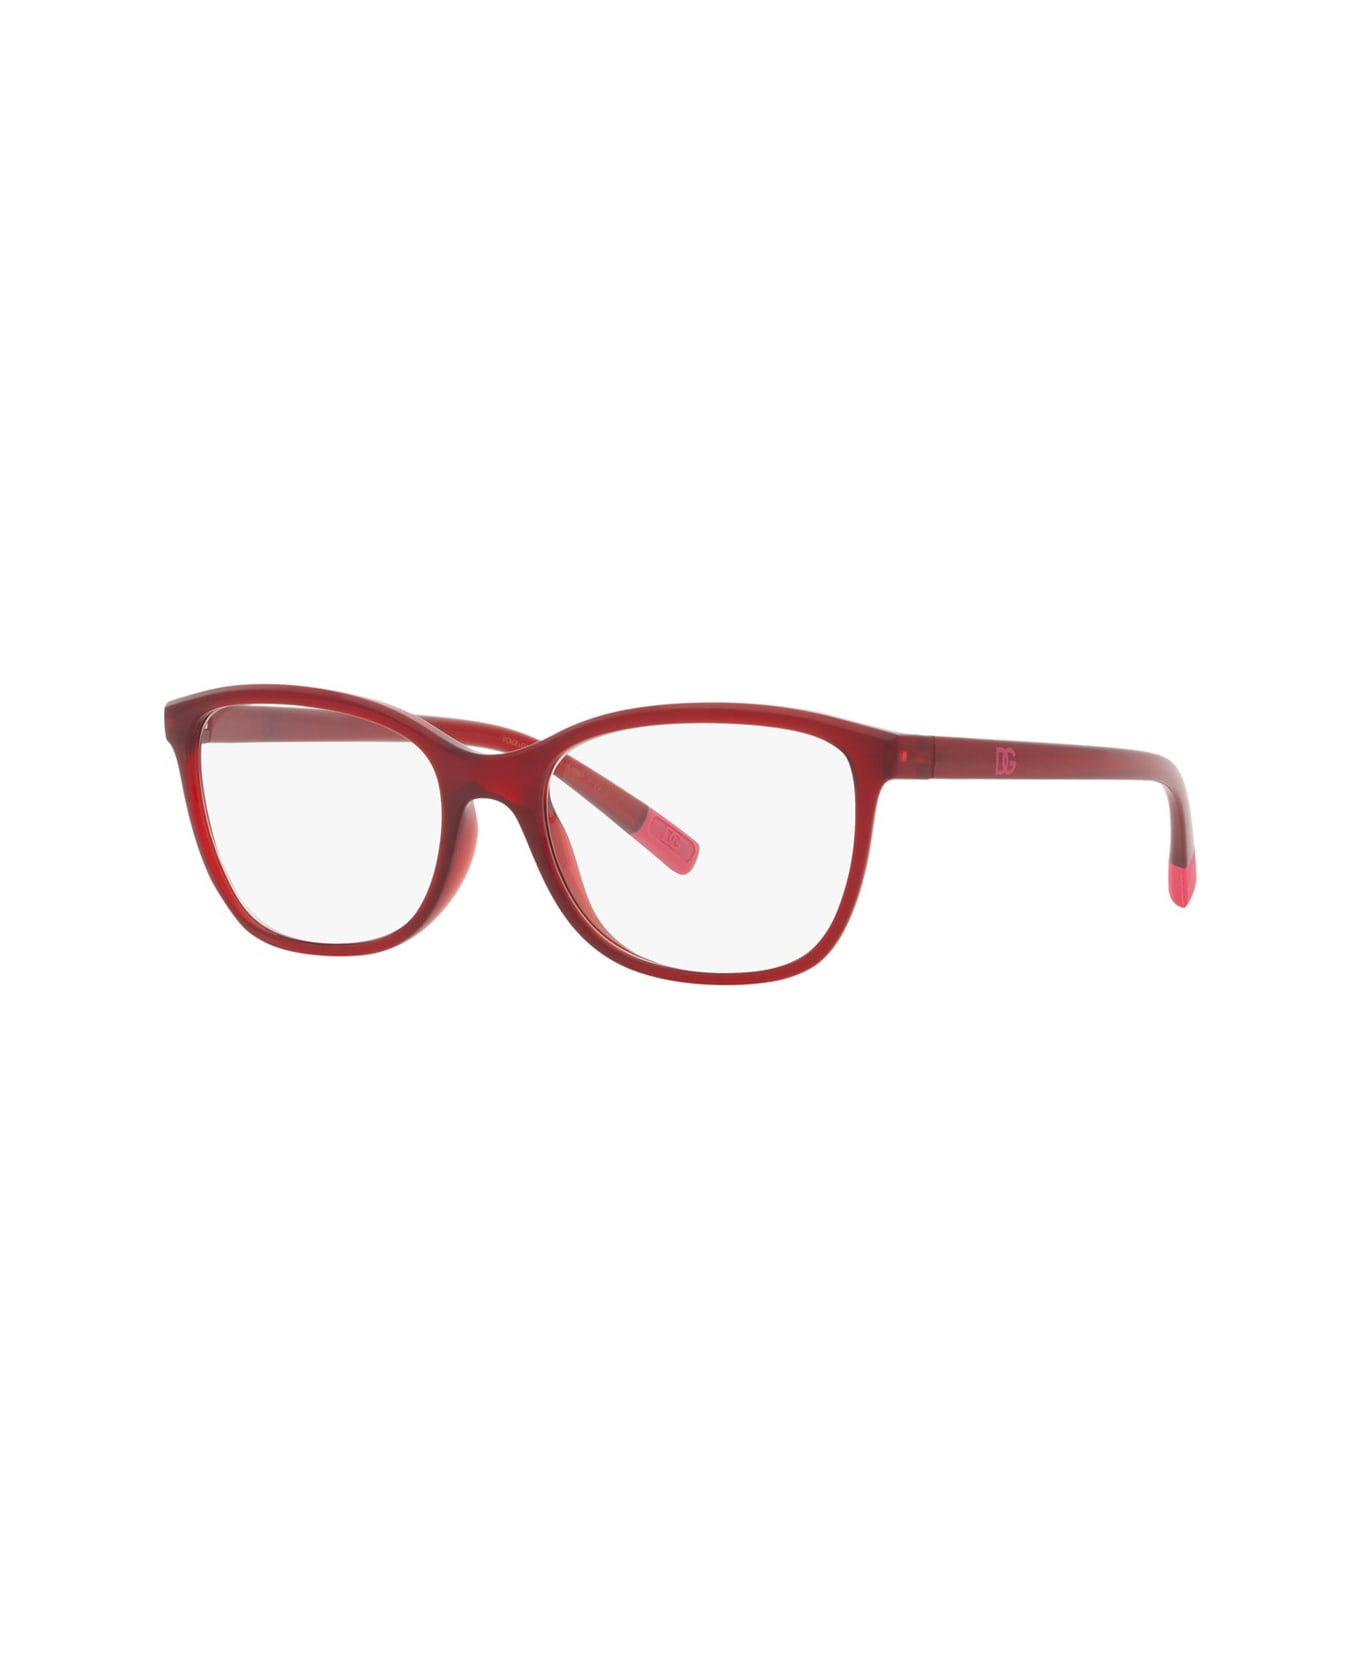 Dolce & Gabbana Eyewear Dg5092 1551 Glasses - Rosso アイウェア